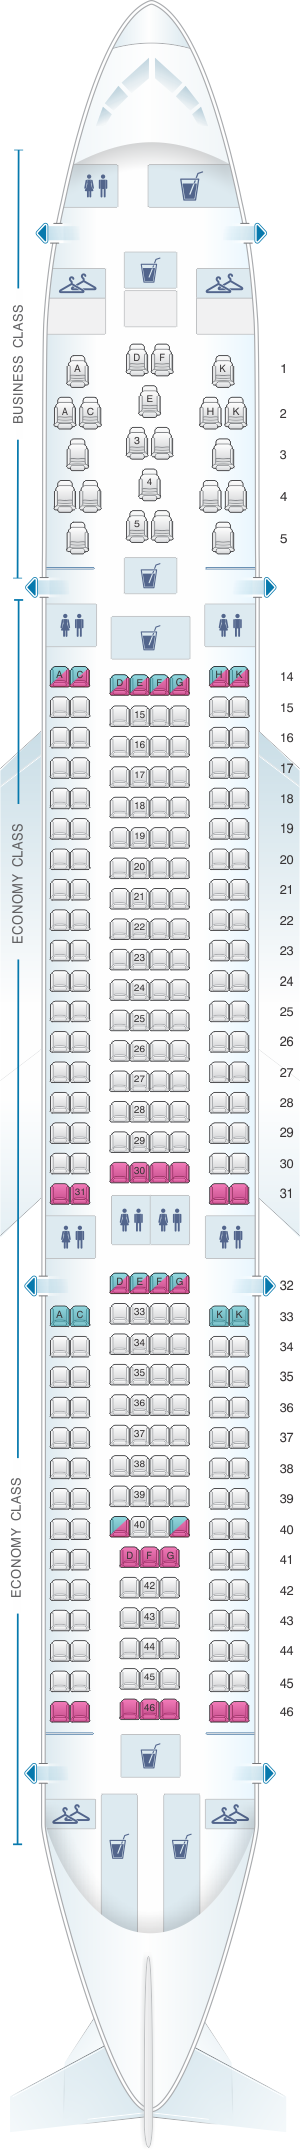 Plan De Cabine Brussels Airlines Airbus A330 200 Seatmaestrofr